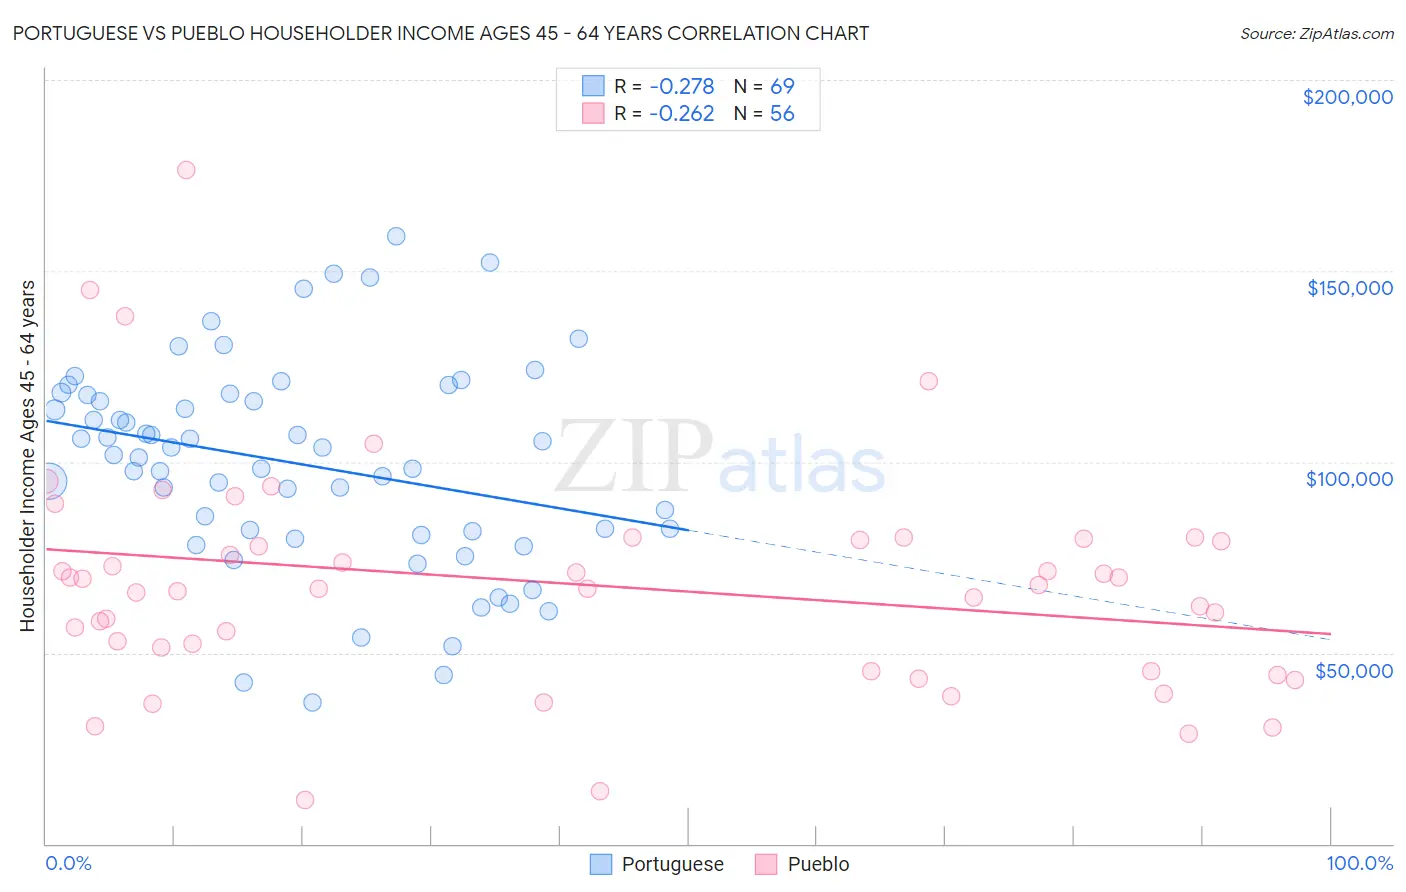 Portuguese vs Pueblo Householder Income Ages 45 - 64 years